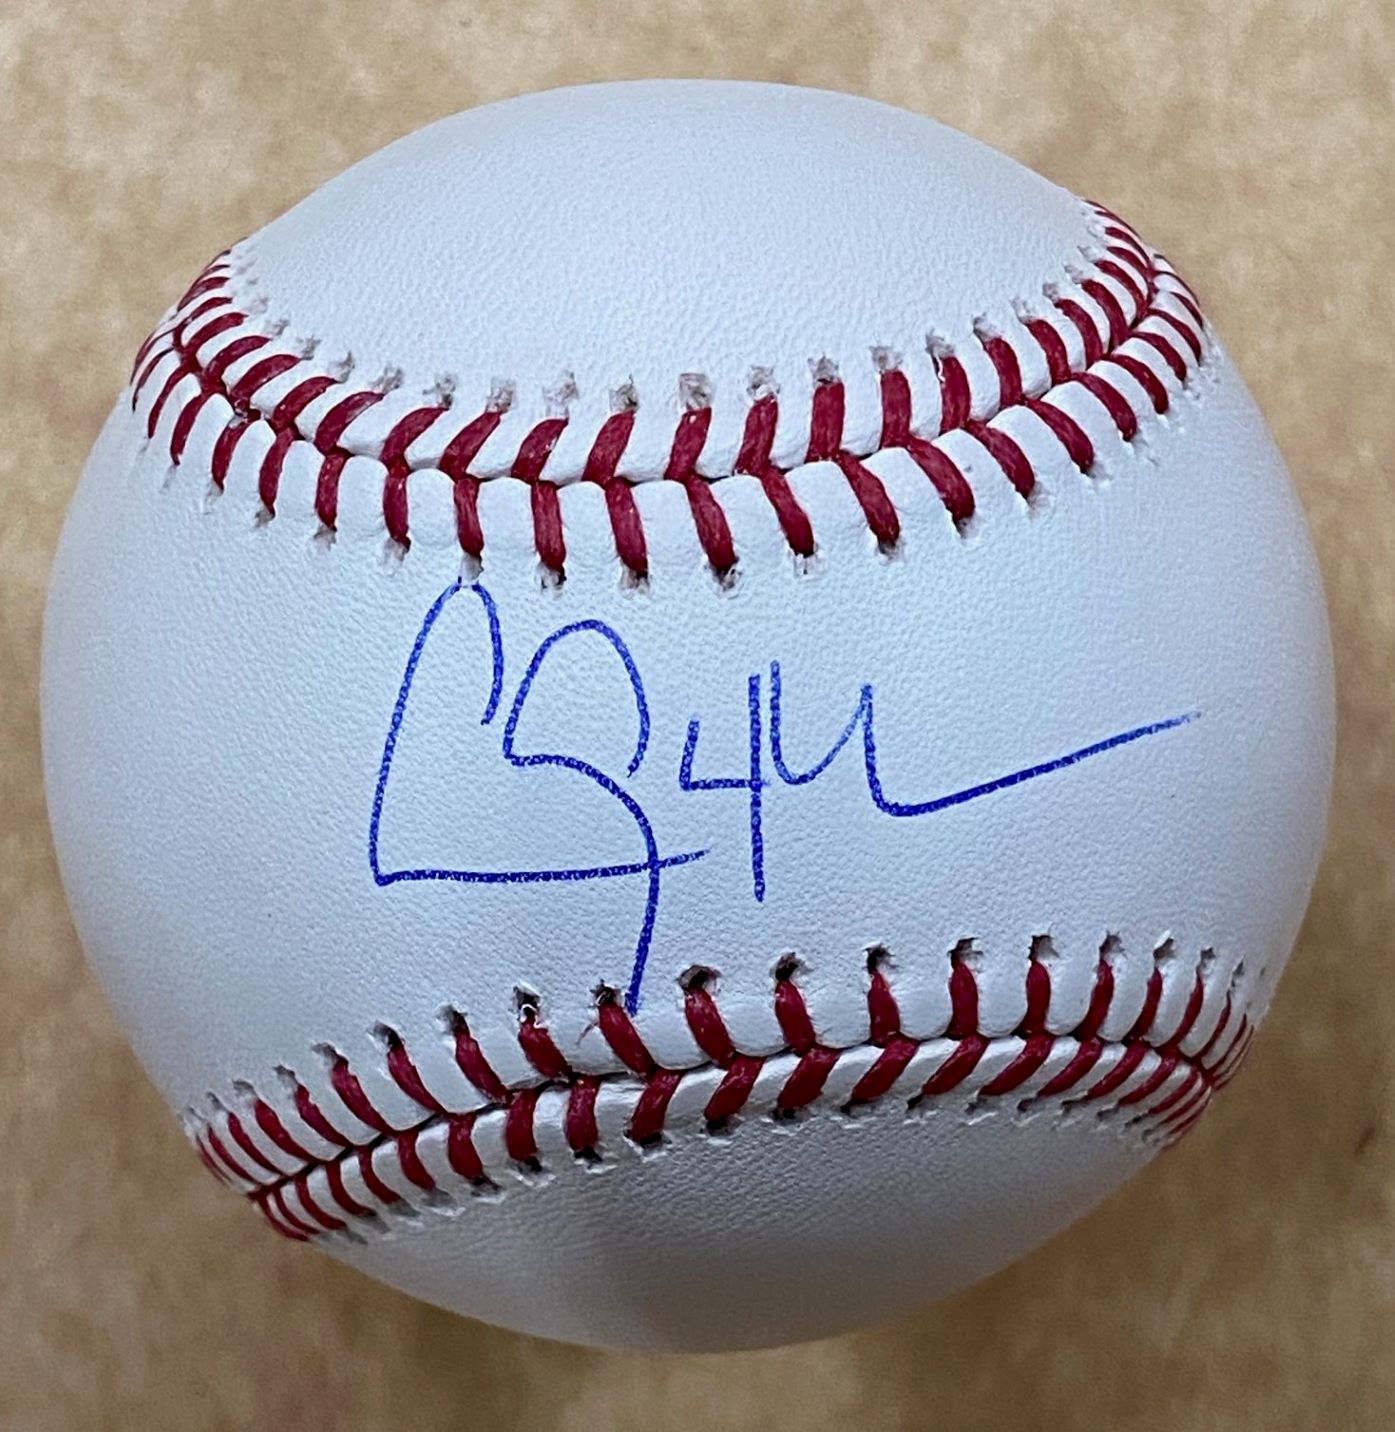 clayton kershaw autograph baseball